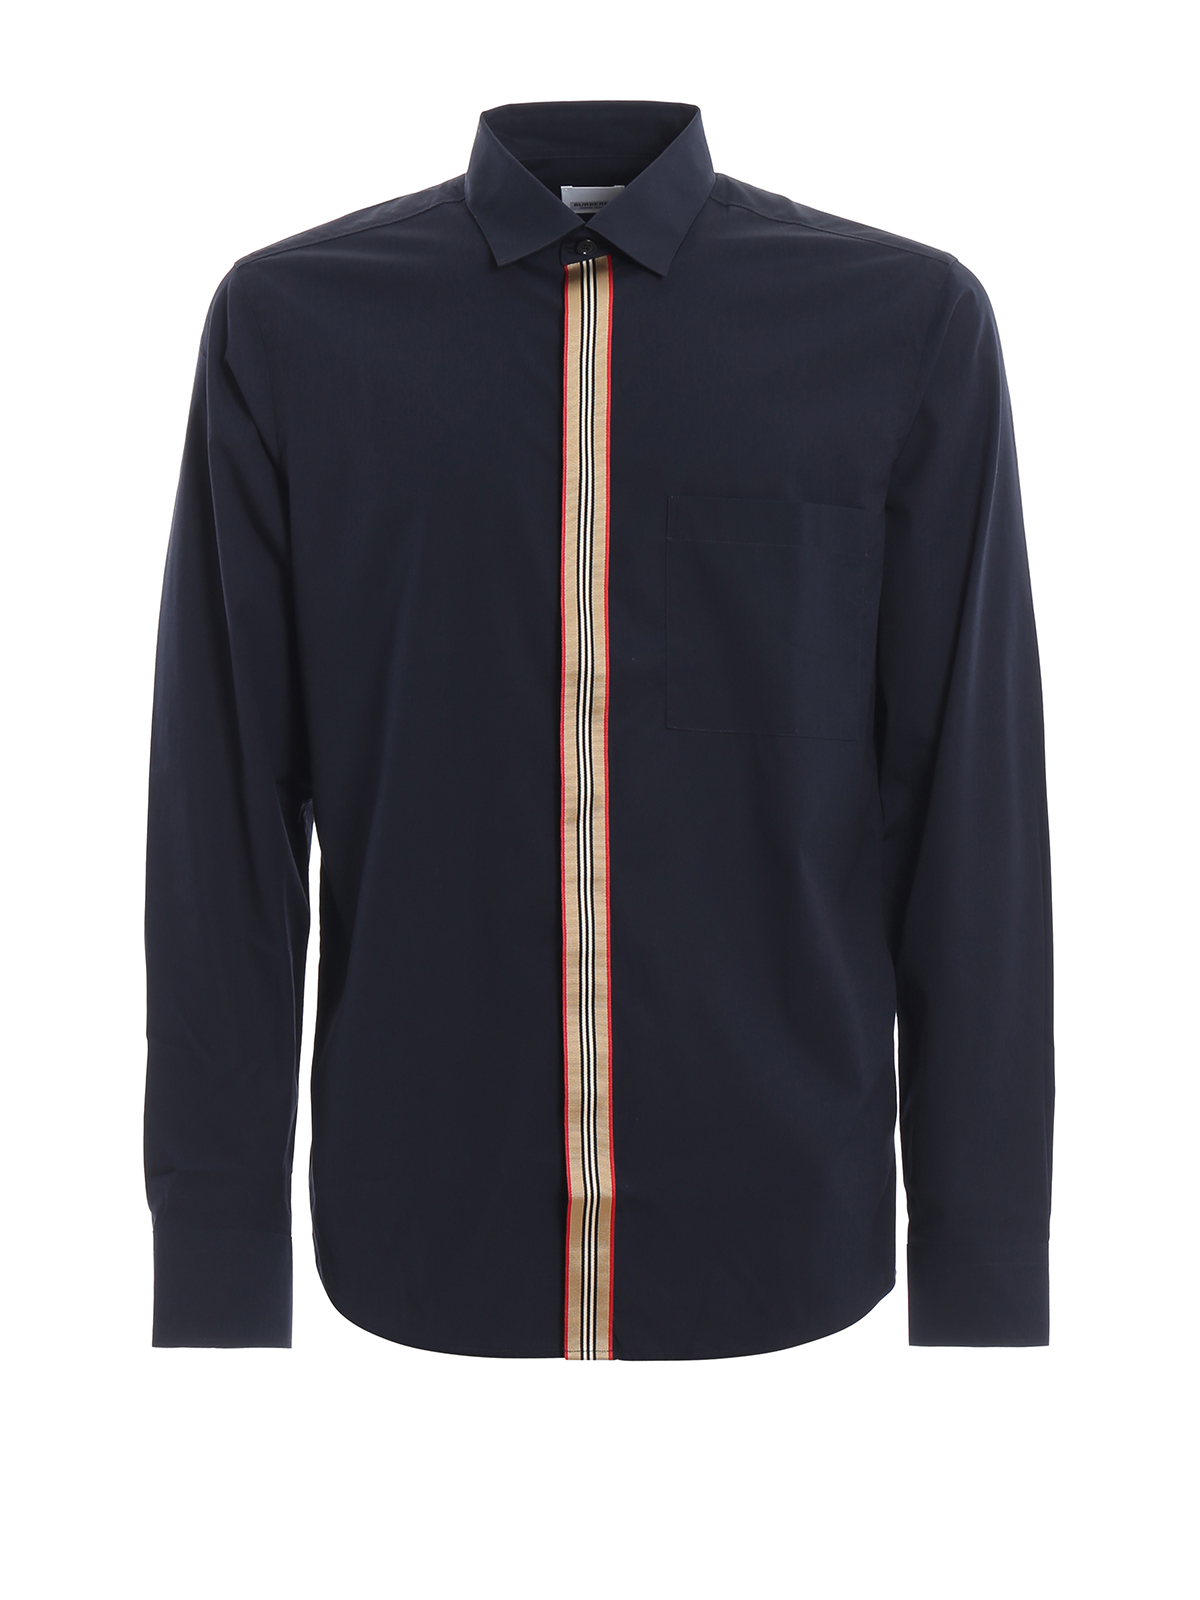 burberry-shirts-silverton-navy-iconic-stripe-shirt-00000168909f00s001.jpeg